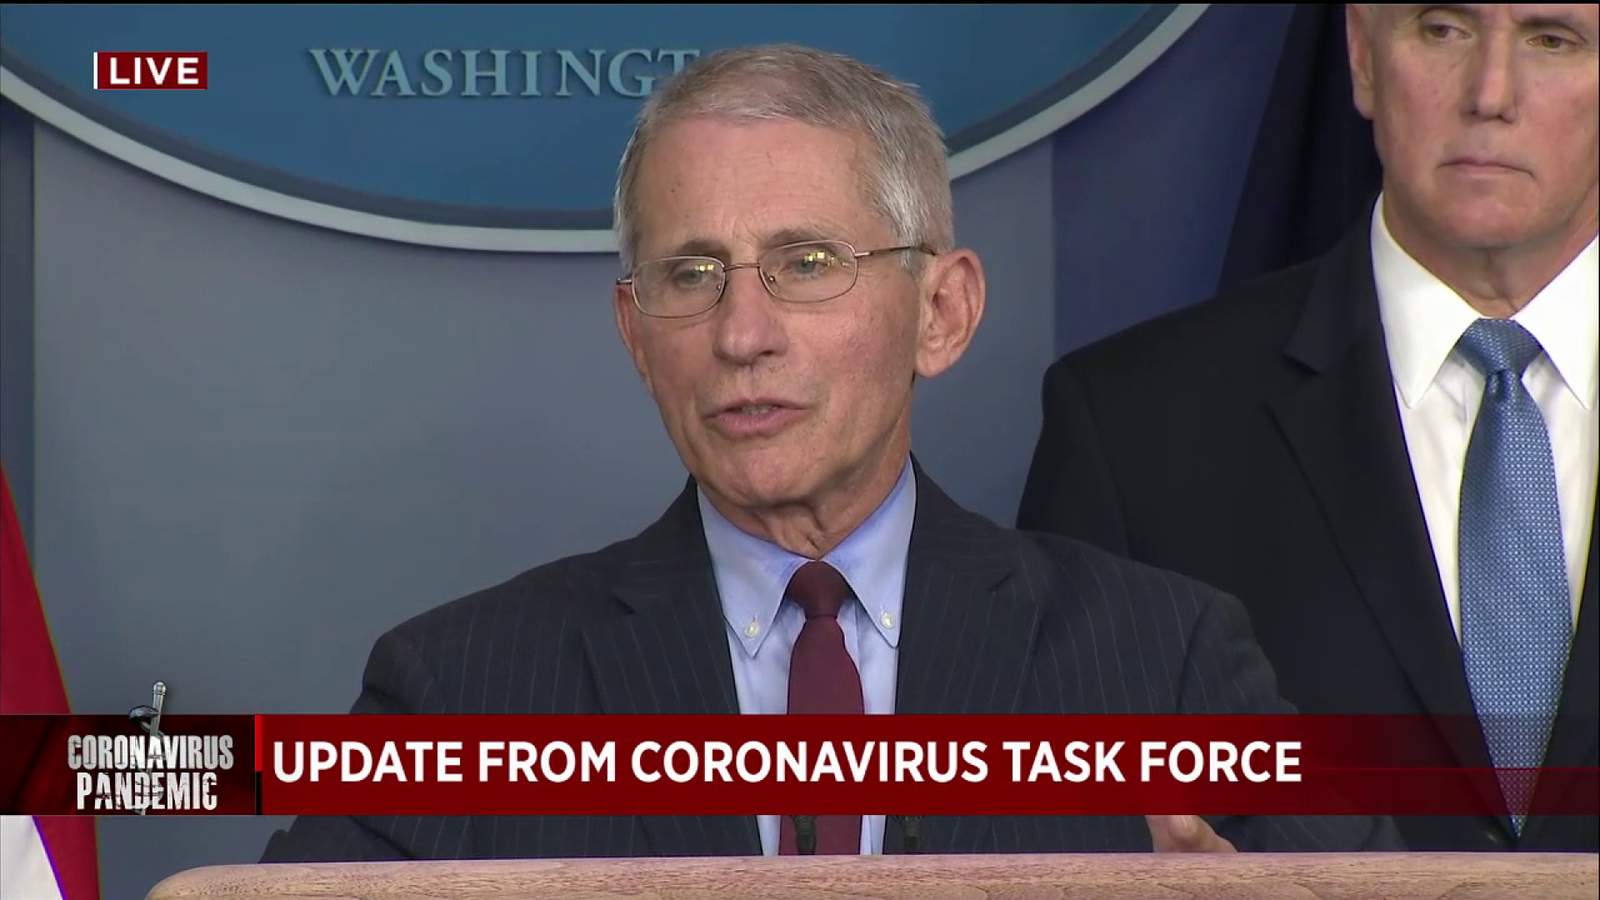 Trump and Fauci on coronavirus: Brace for ‘rough’ 2-week period